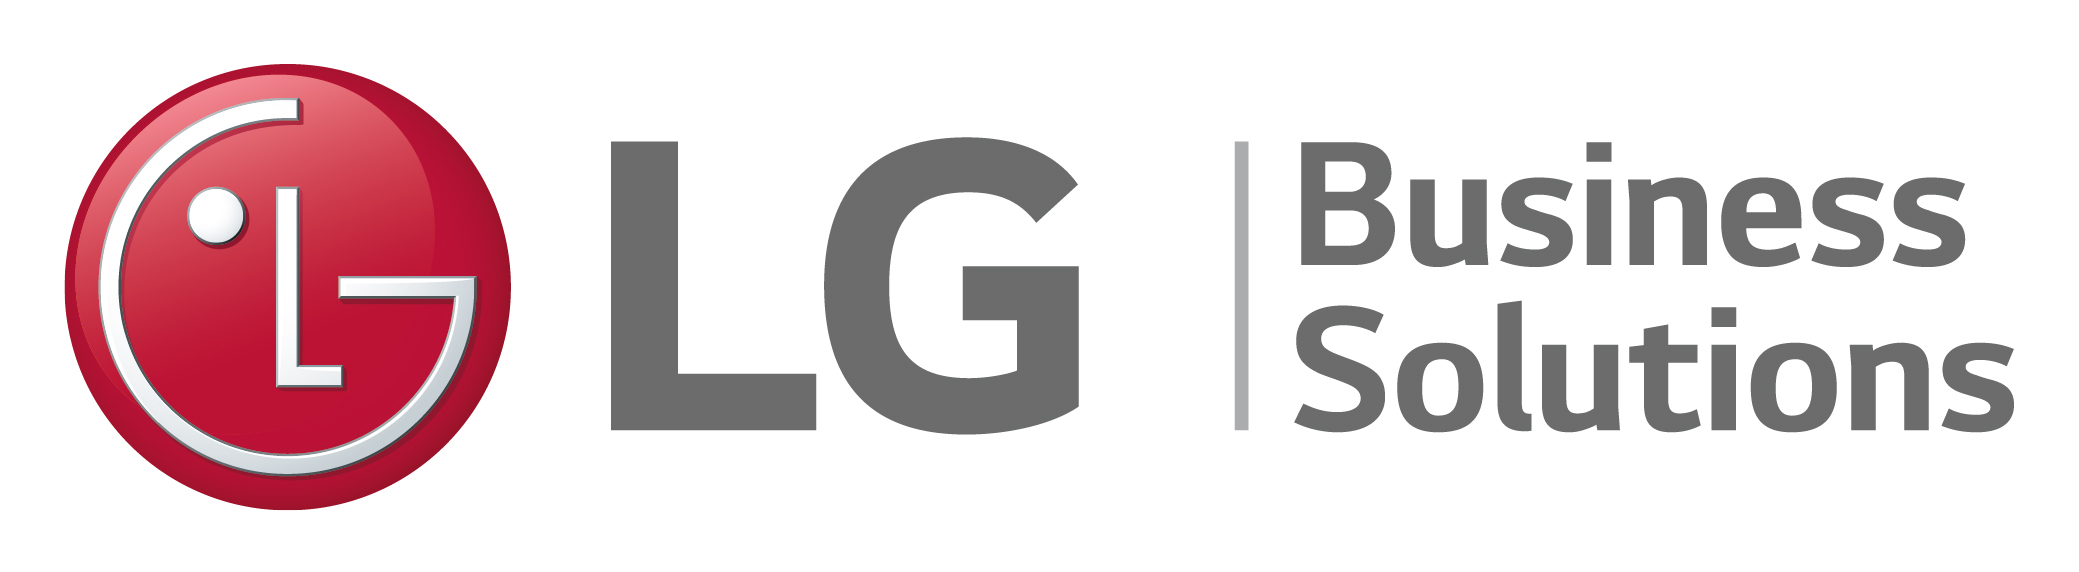 1_LGE_B2B_Brand_Logo_3D_White_Background